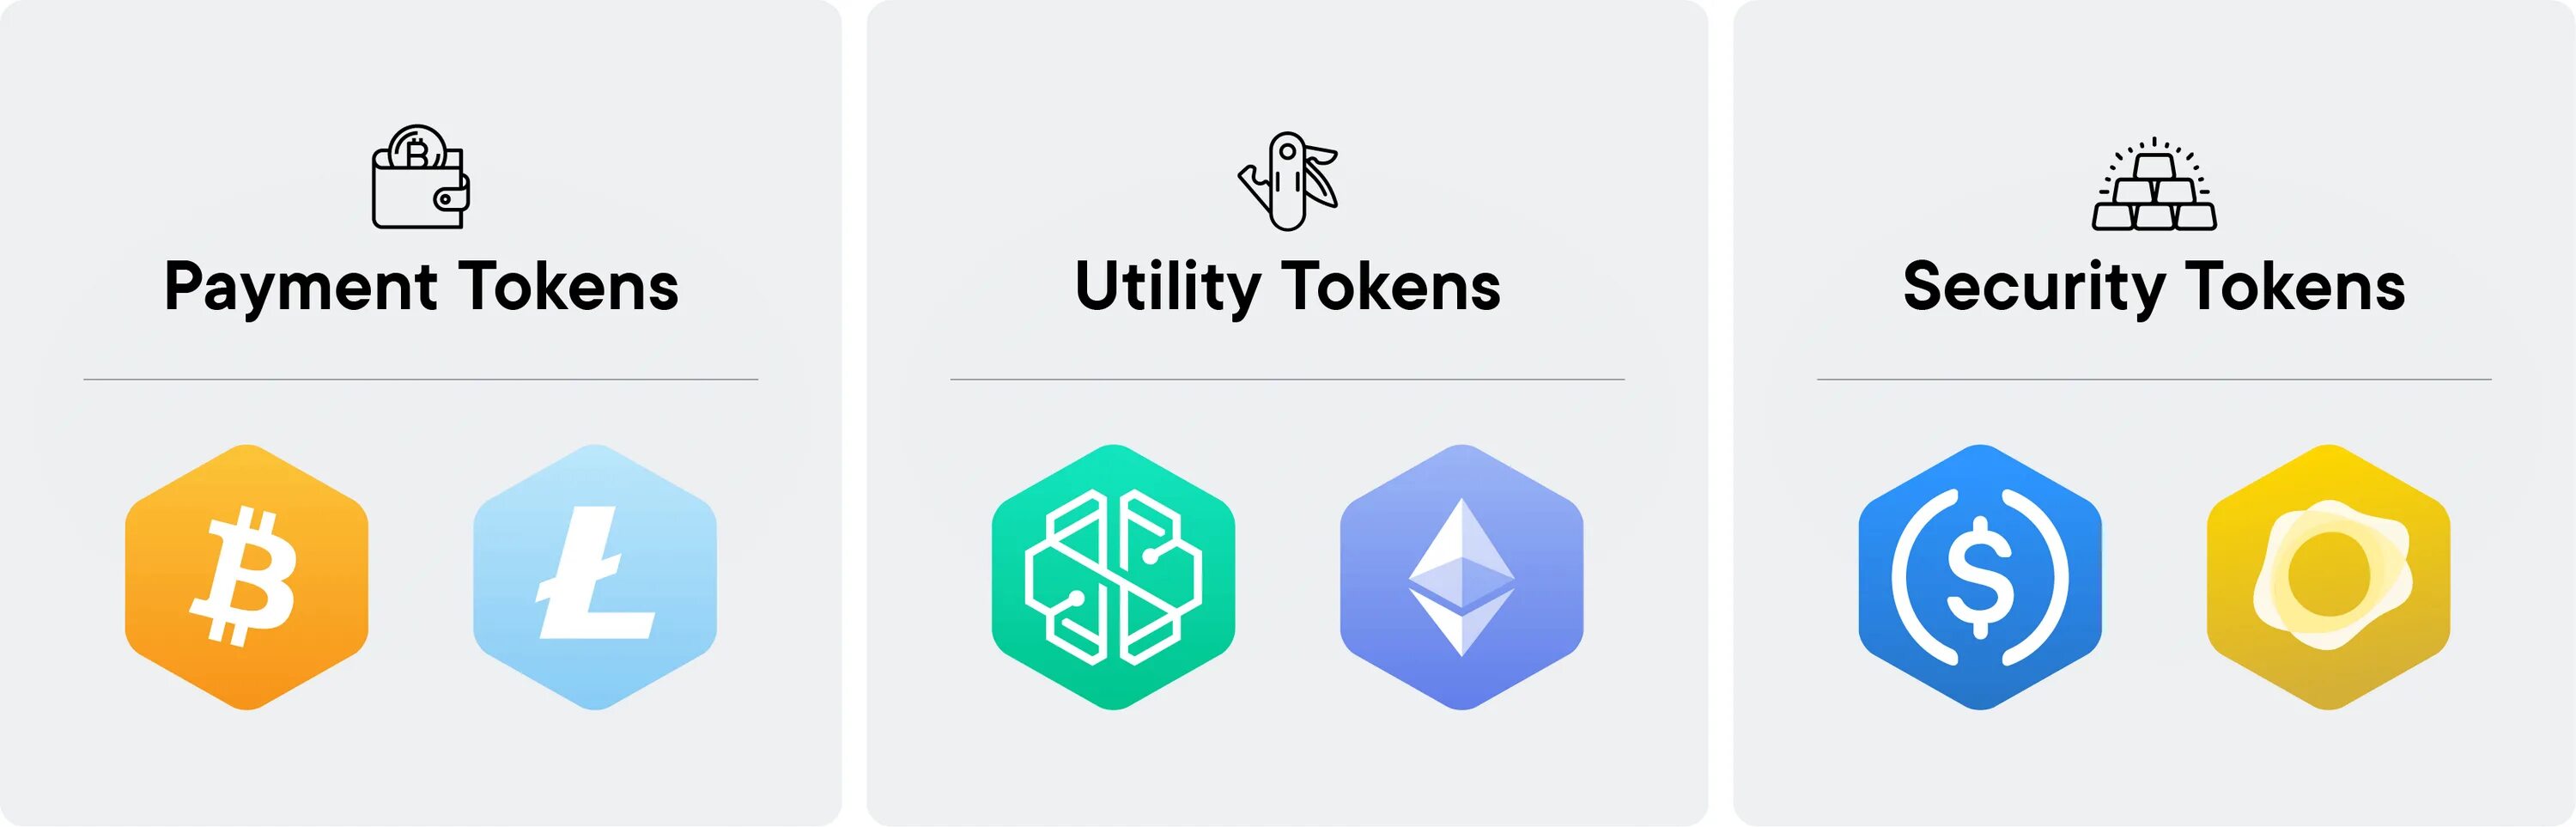 Utility tokens. Виды токенов. Токены виды. Utility token примеры. Backed tokens